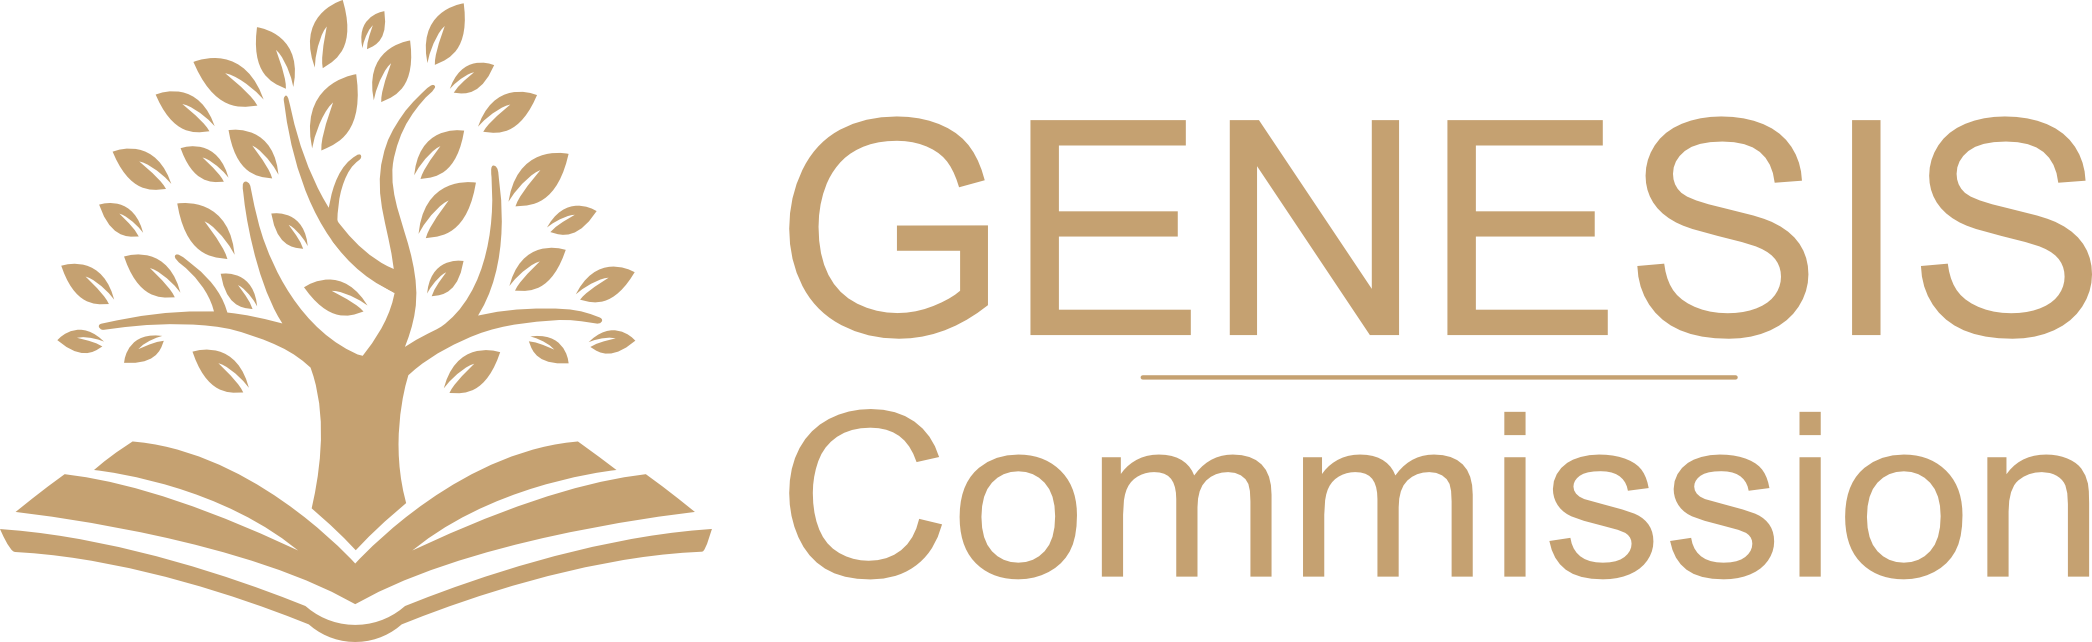 Genesis Commission